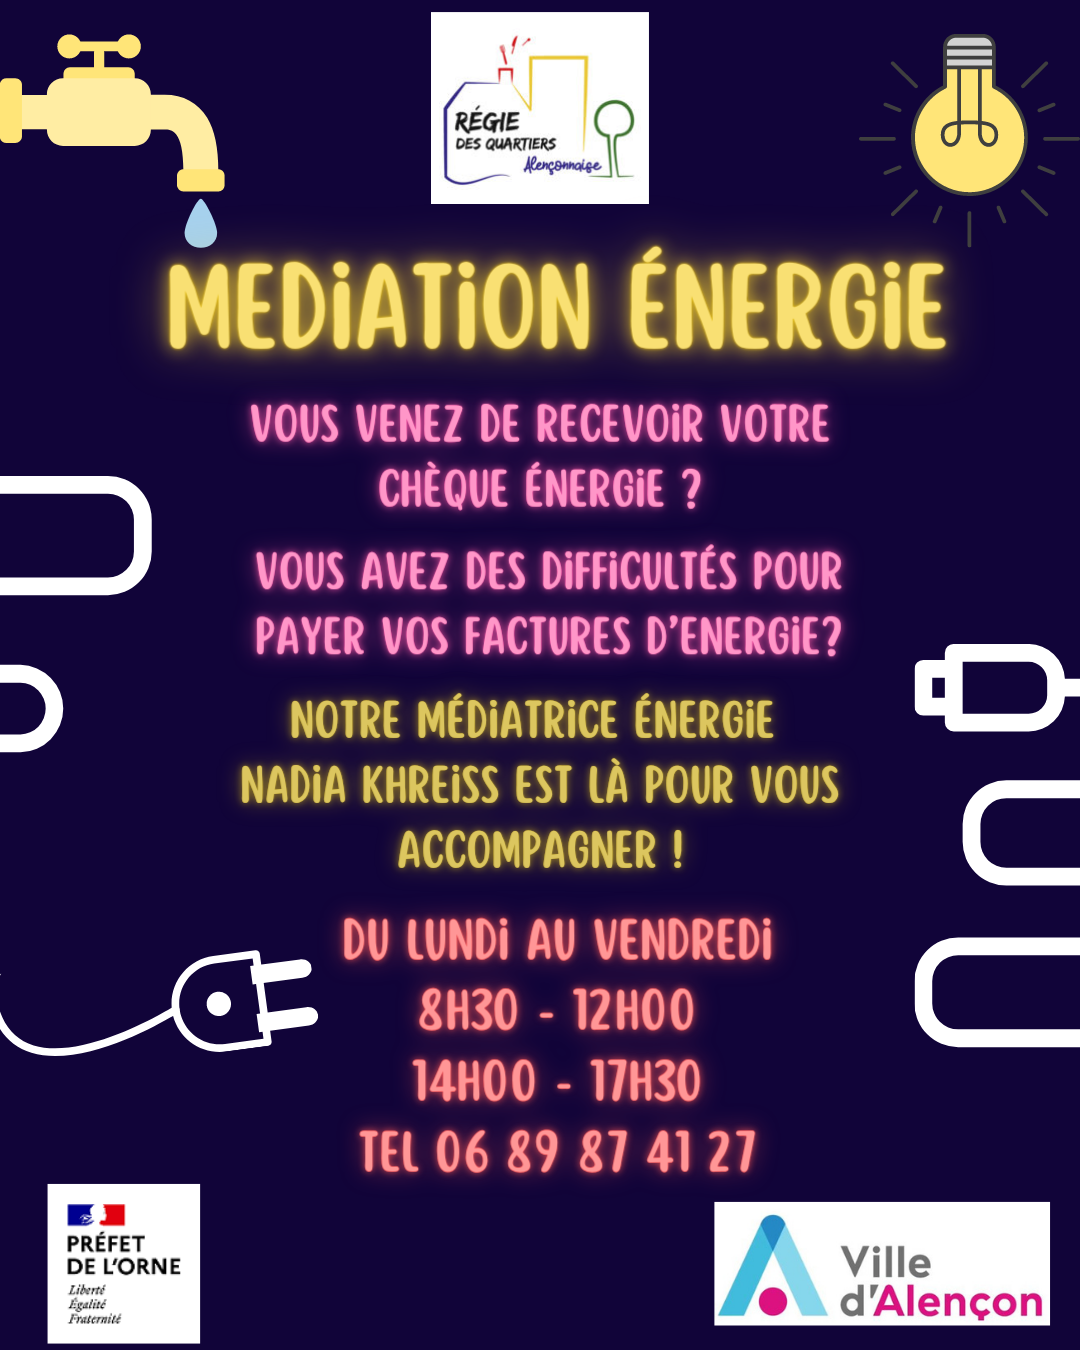 Mediation Energie arrive !